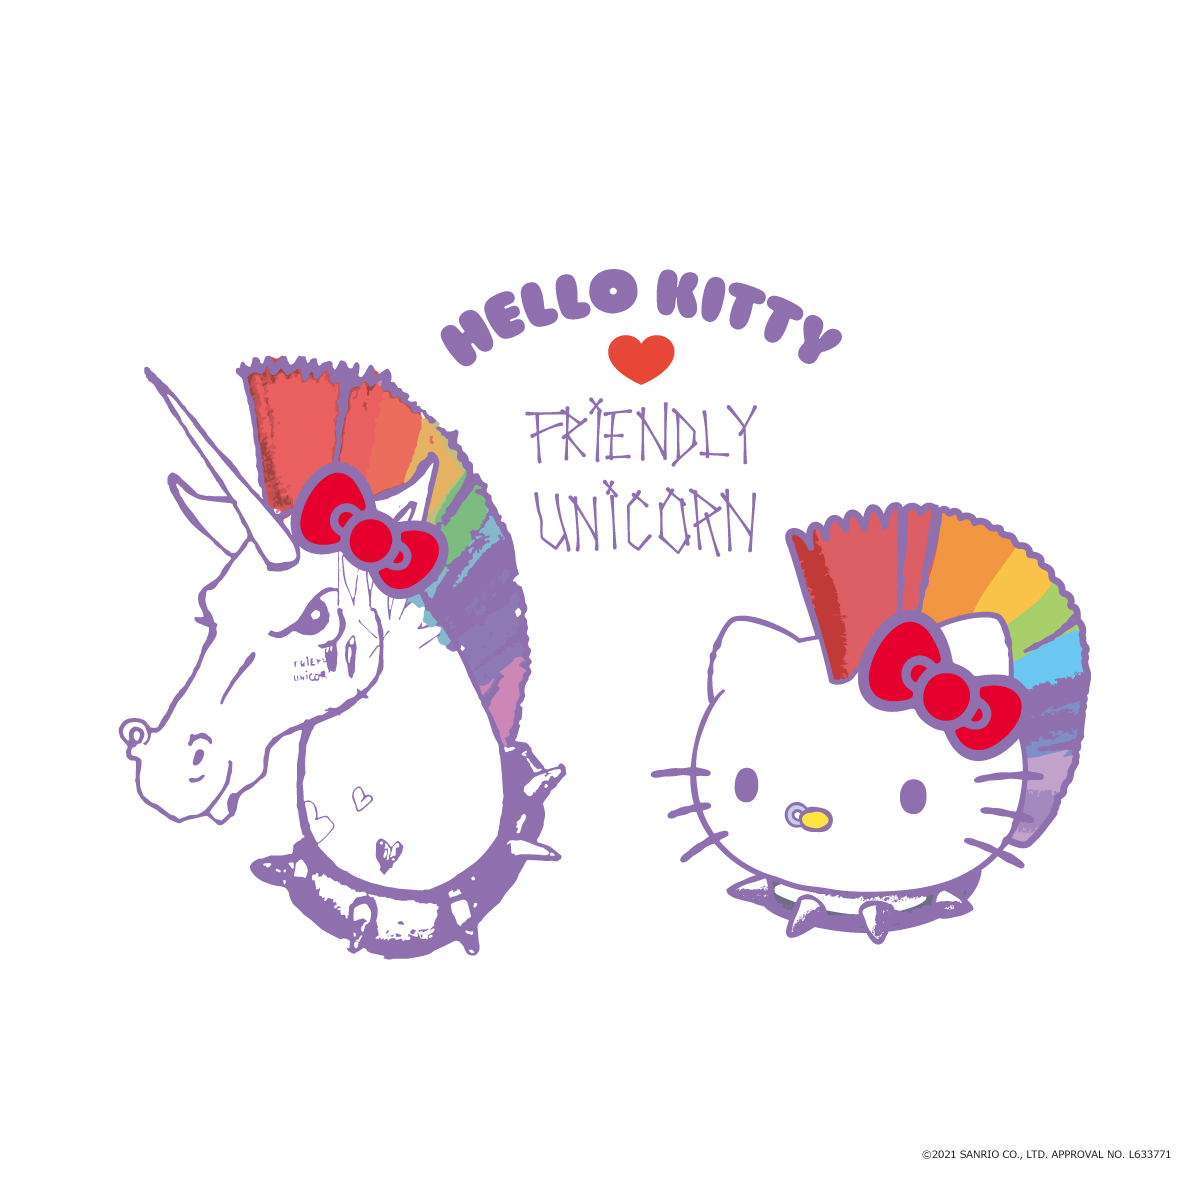 Friendly Unicorn x Hello Kitty